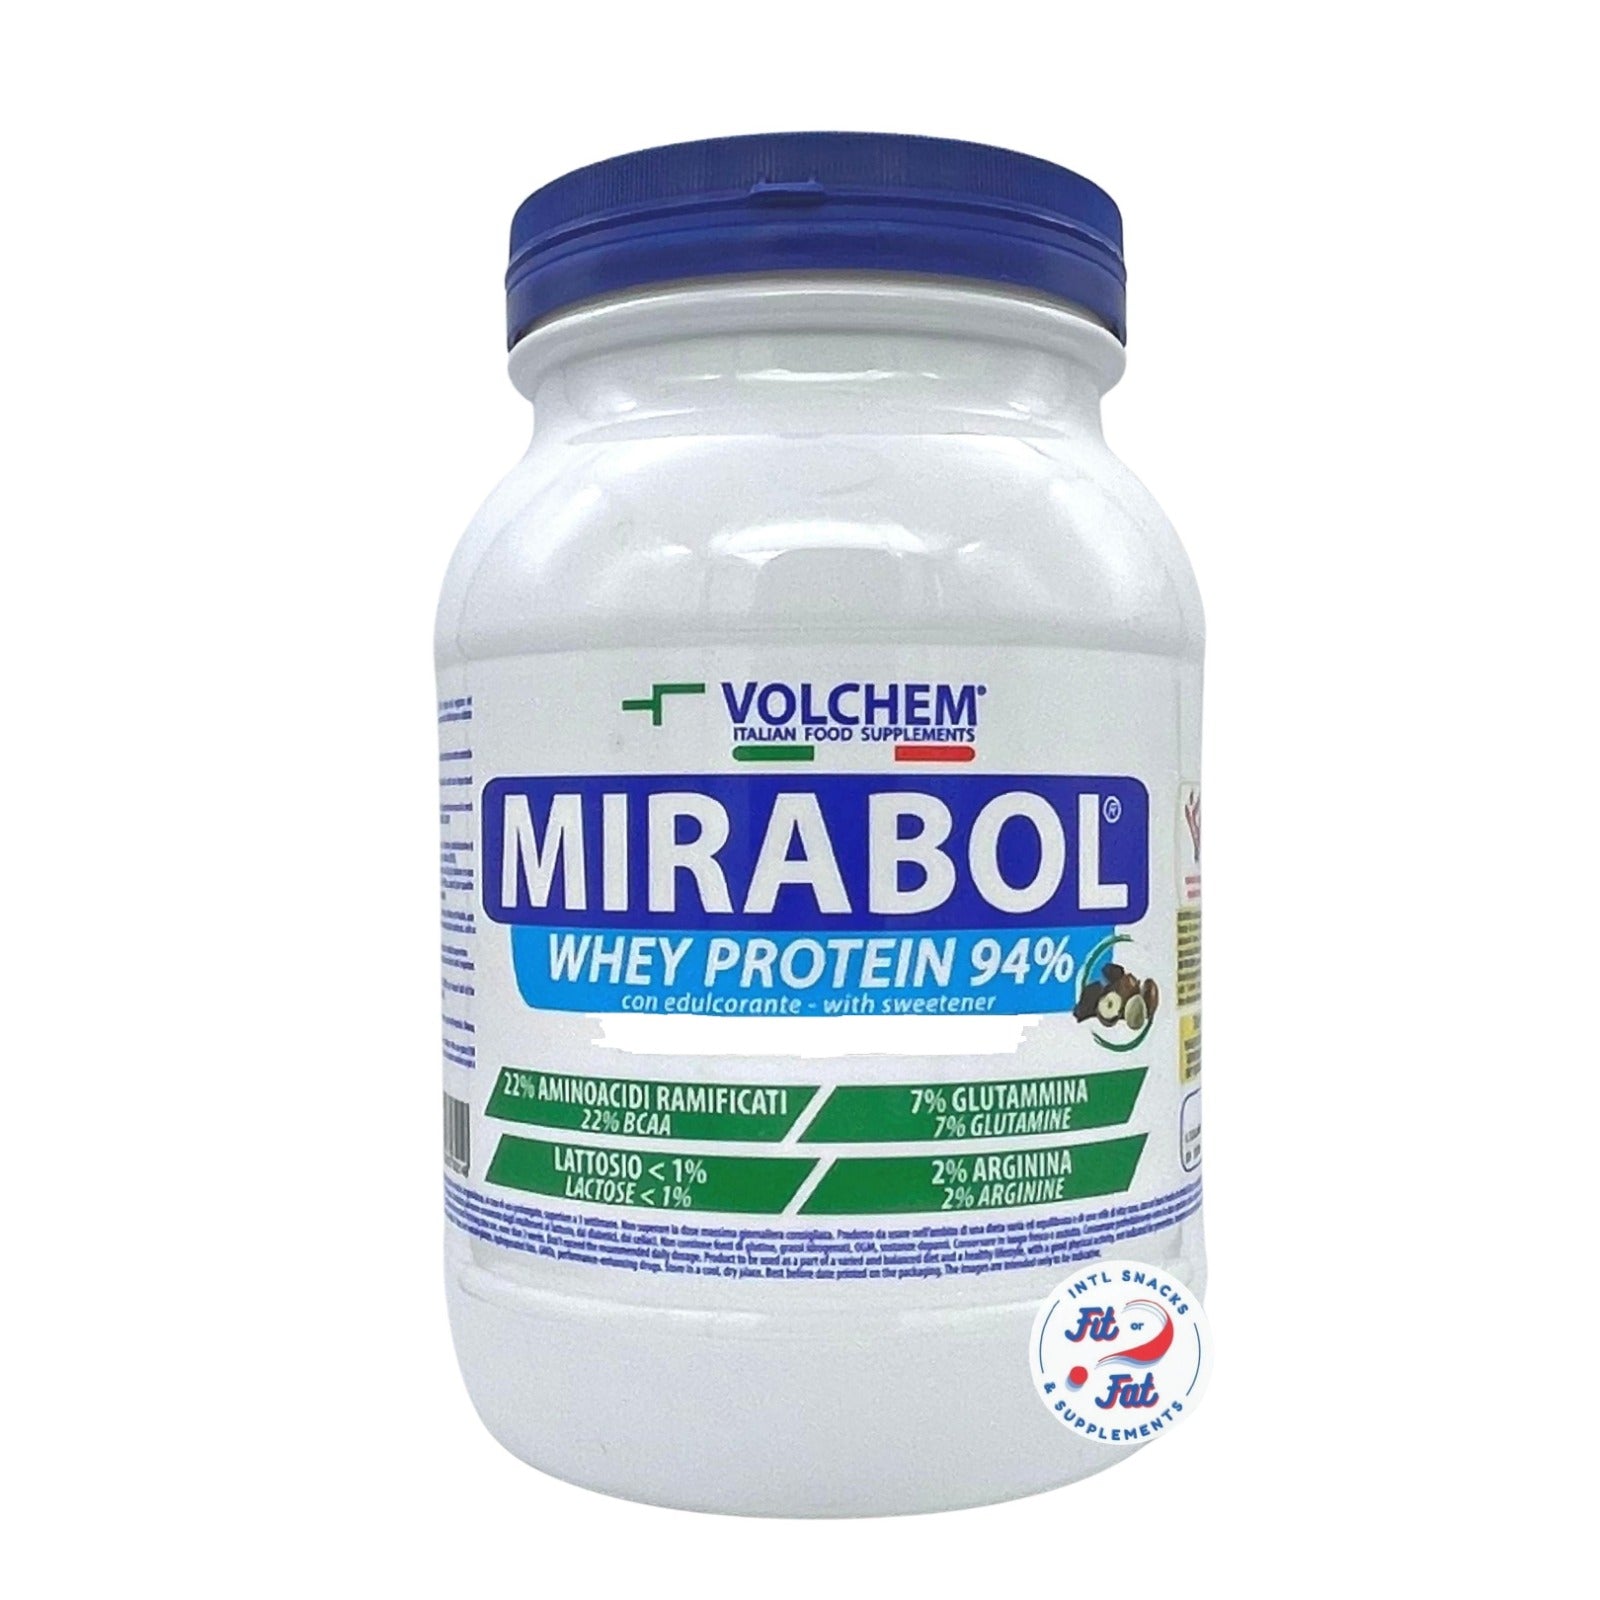 Volchem Mirabol Whey Protein 94% - Proteine Siero del Latte 750g Fragola